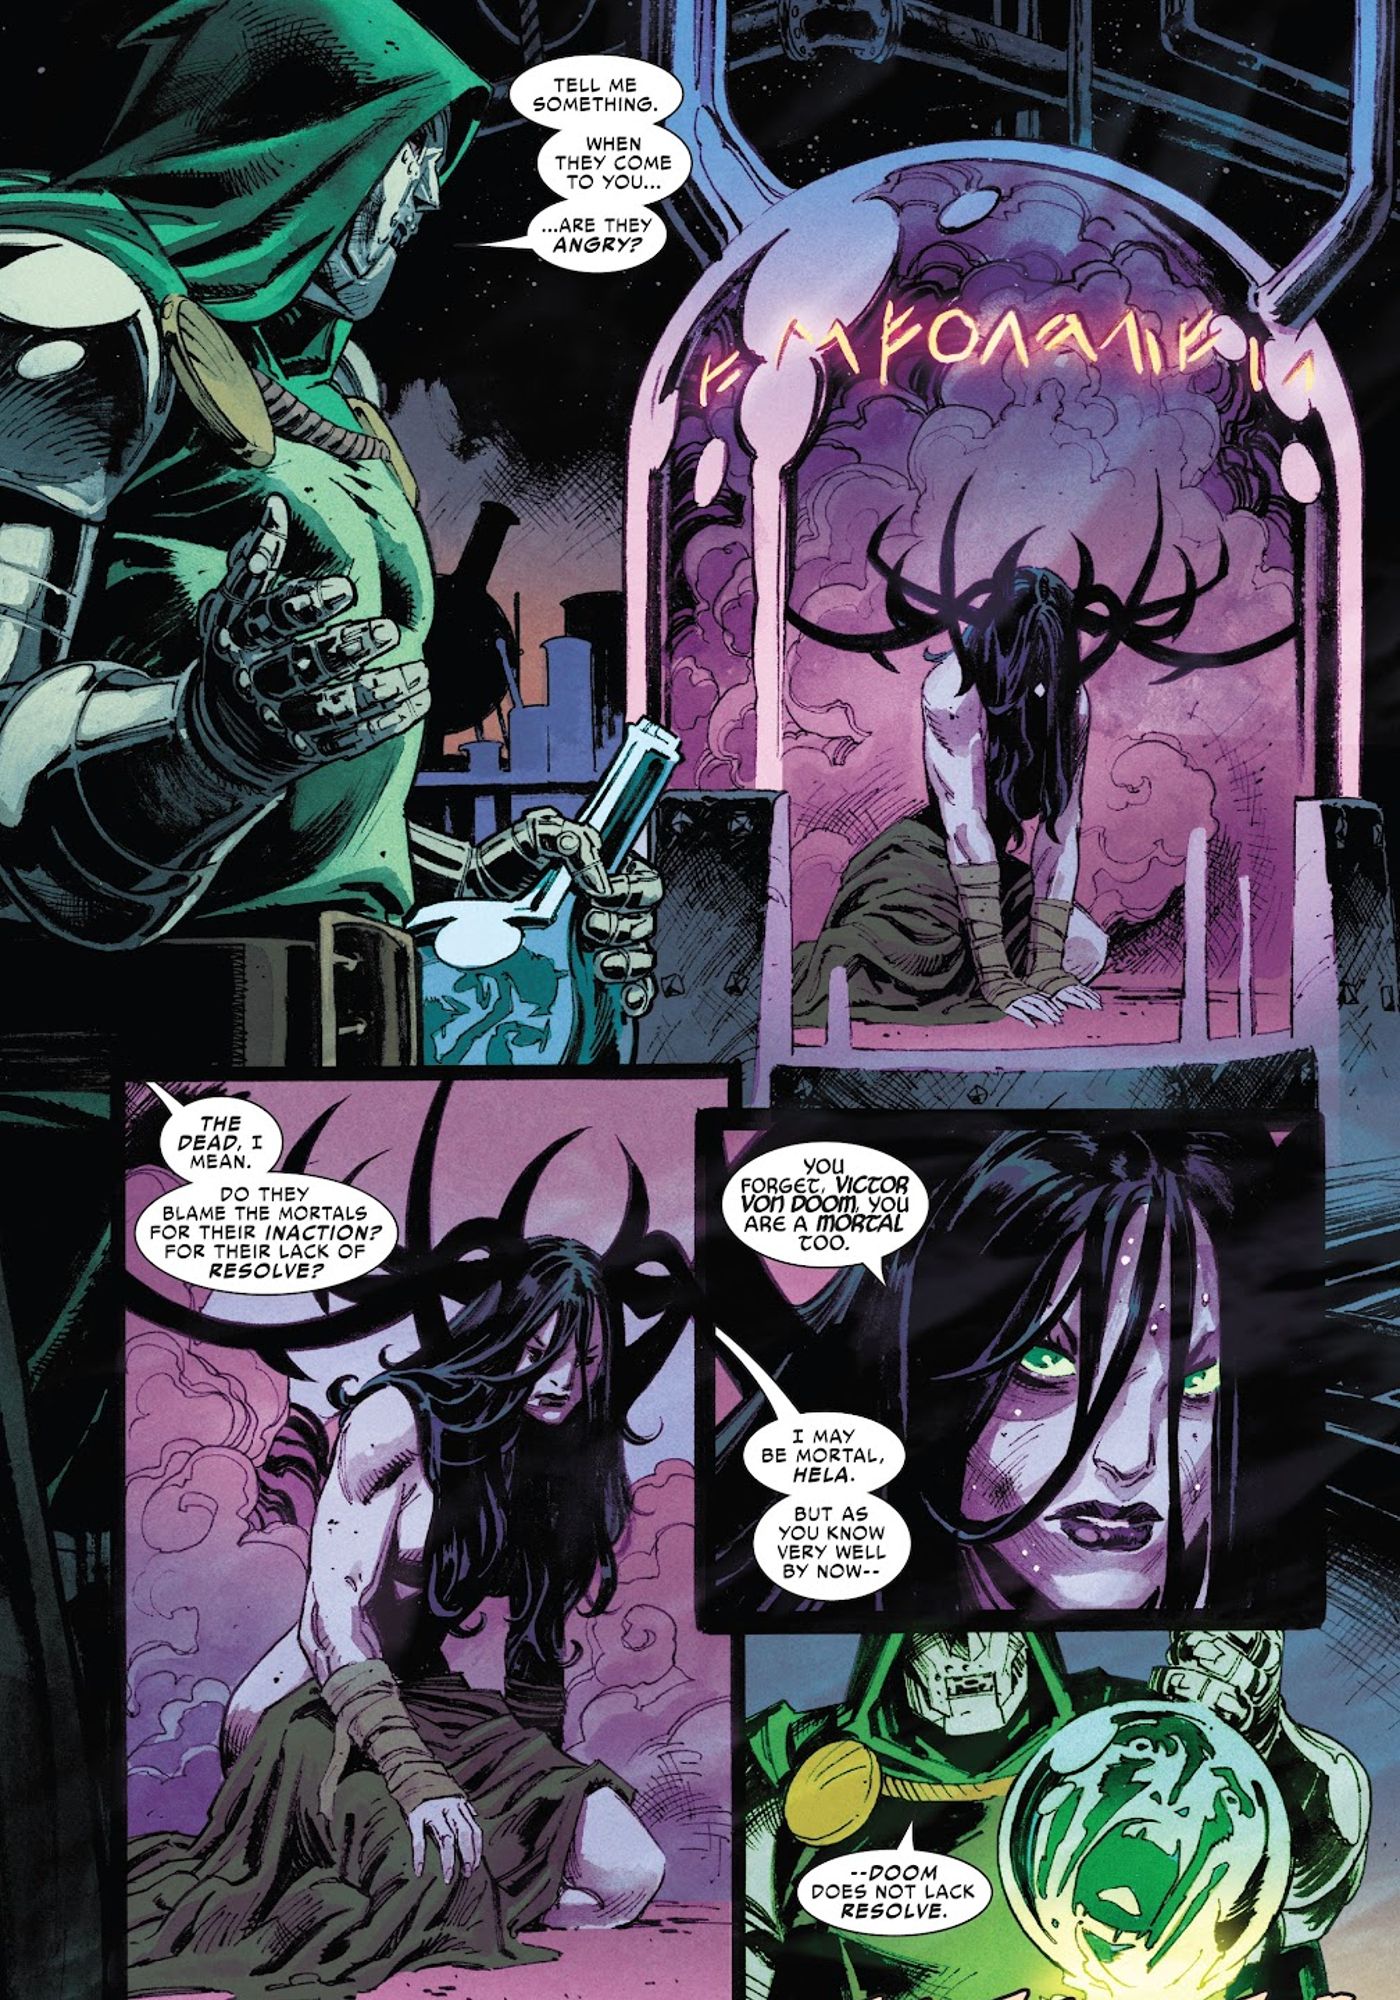 doctor doom takes hela prisoner in marvel comics